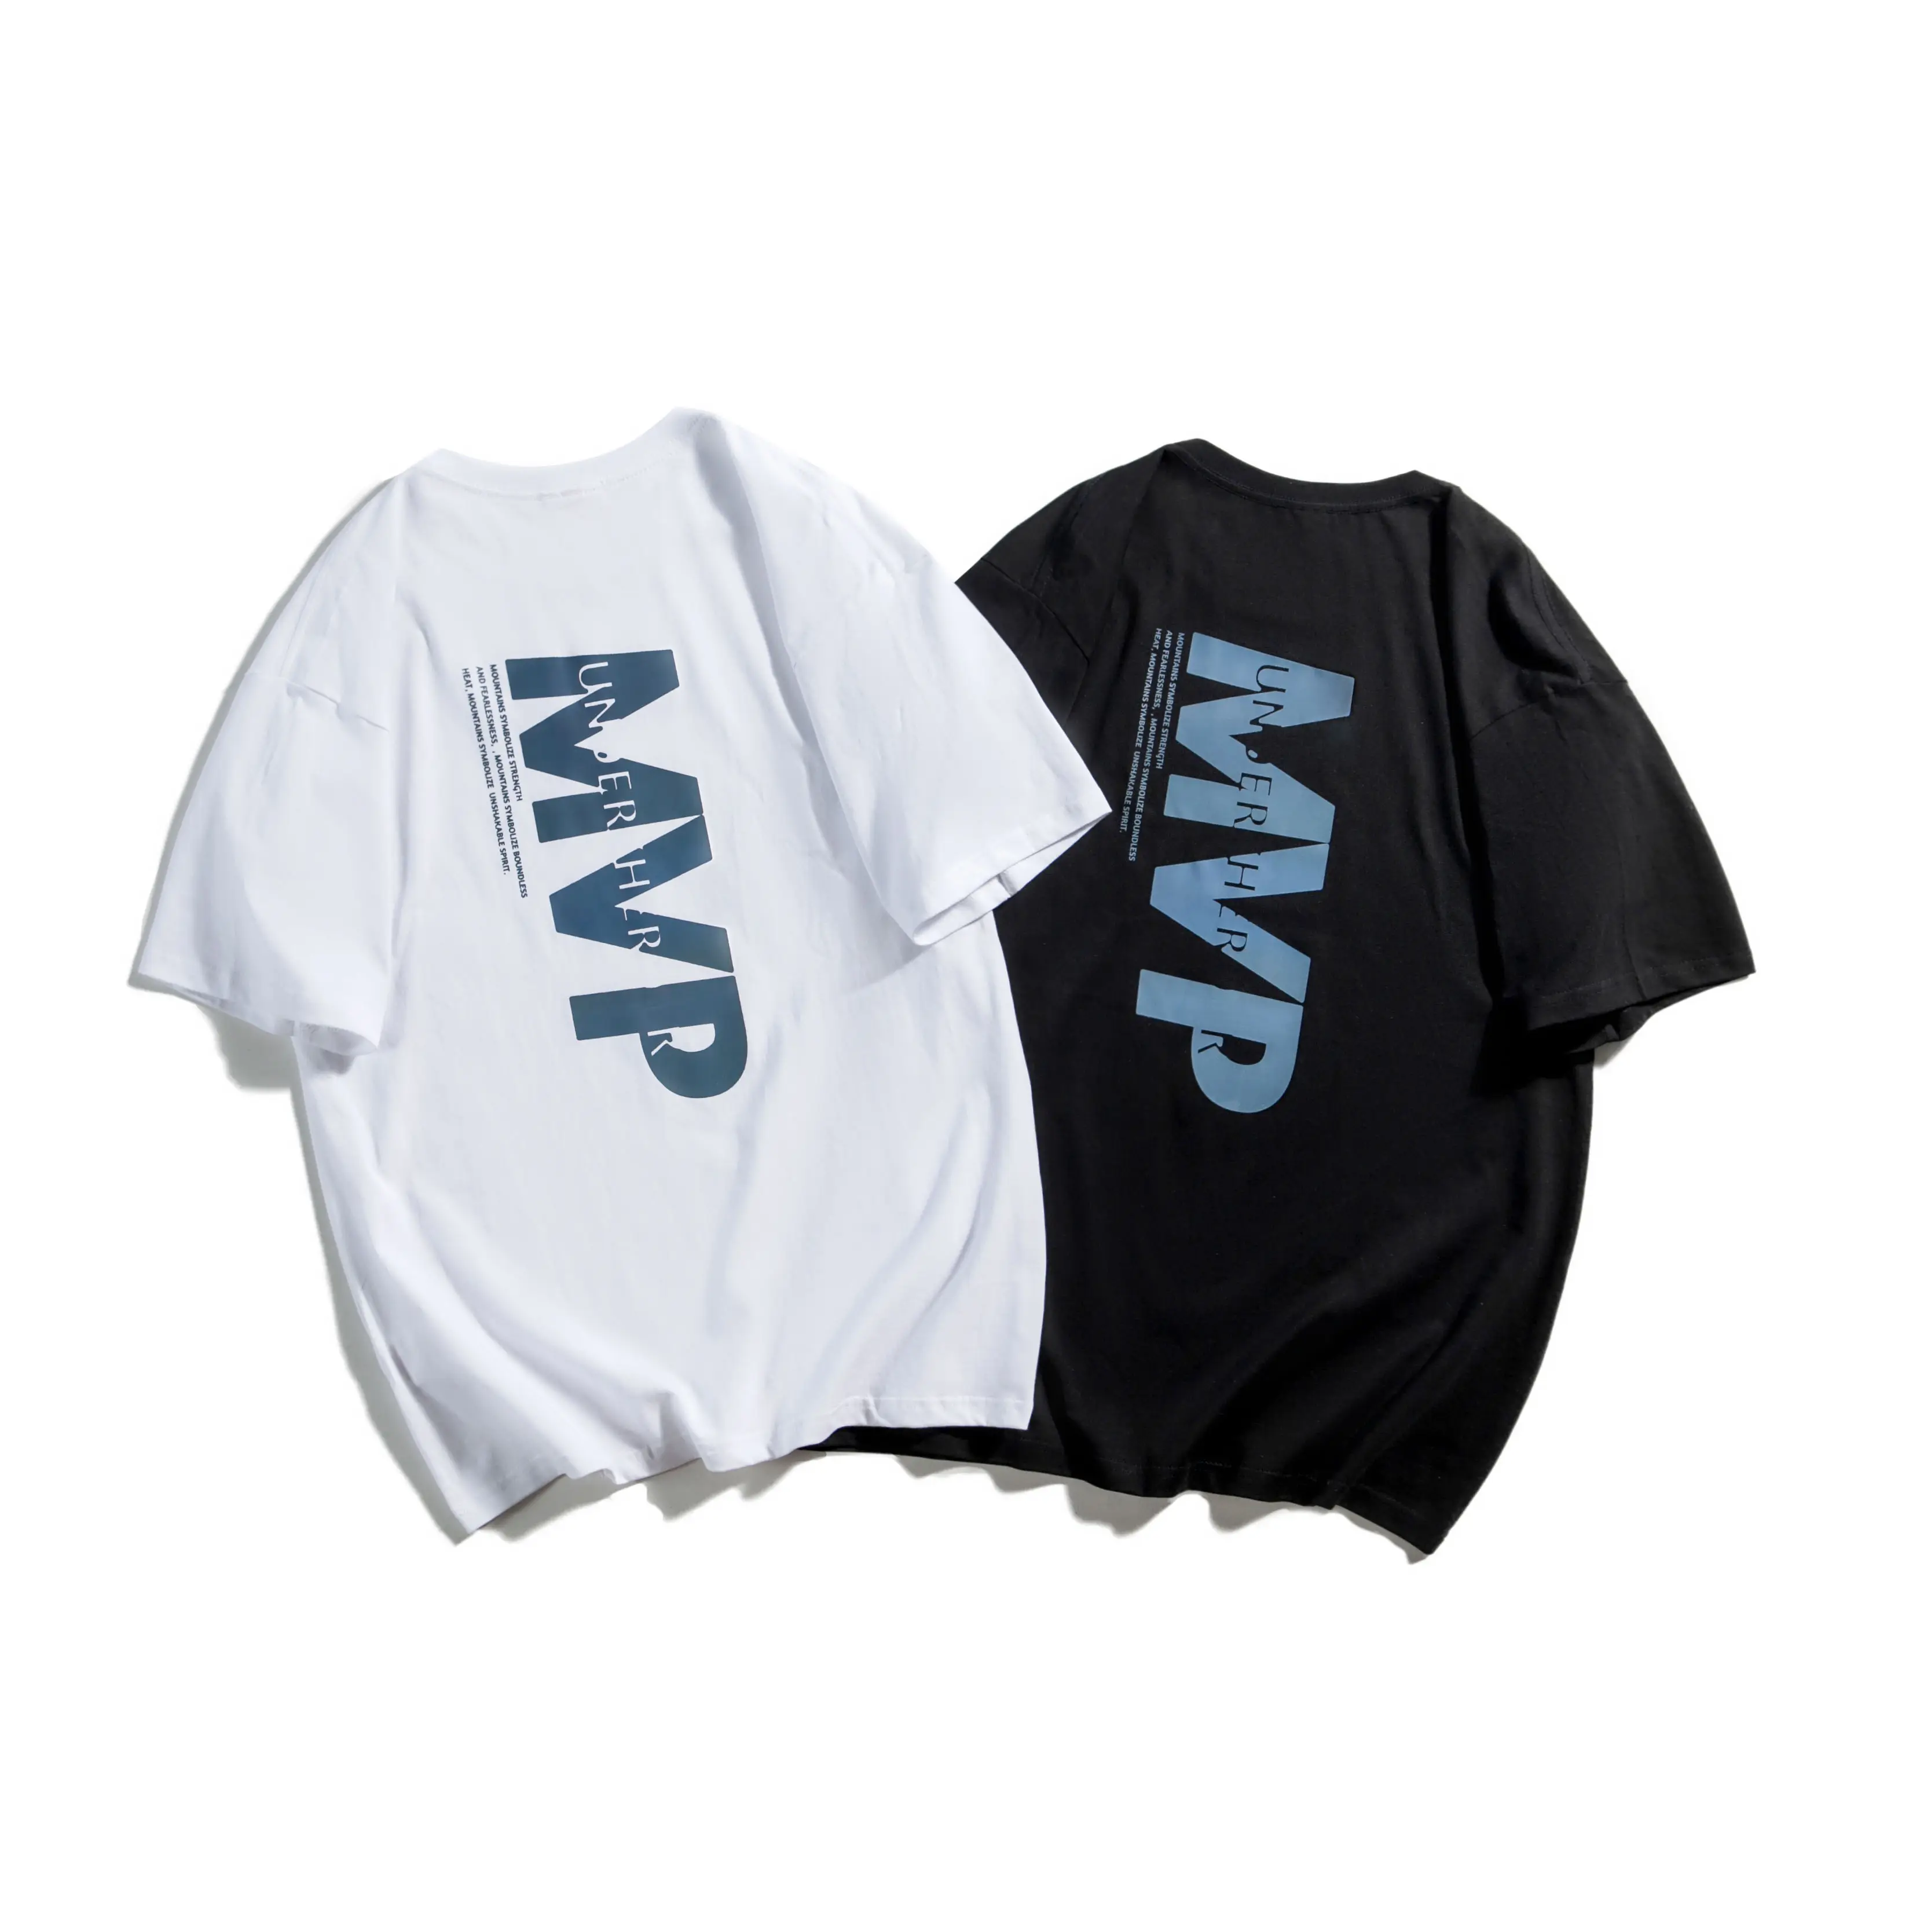 Fashion Korean Style Men Clothing For Printed Tshirts Premium Cotton T-Shirt Couple Tee Basic In Bulk T Shirt